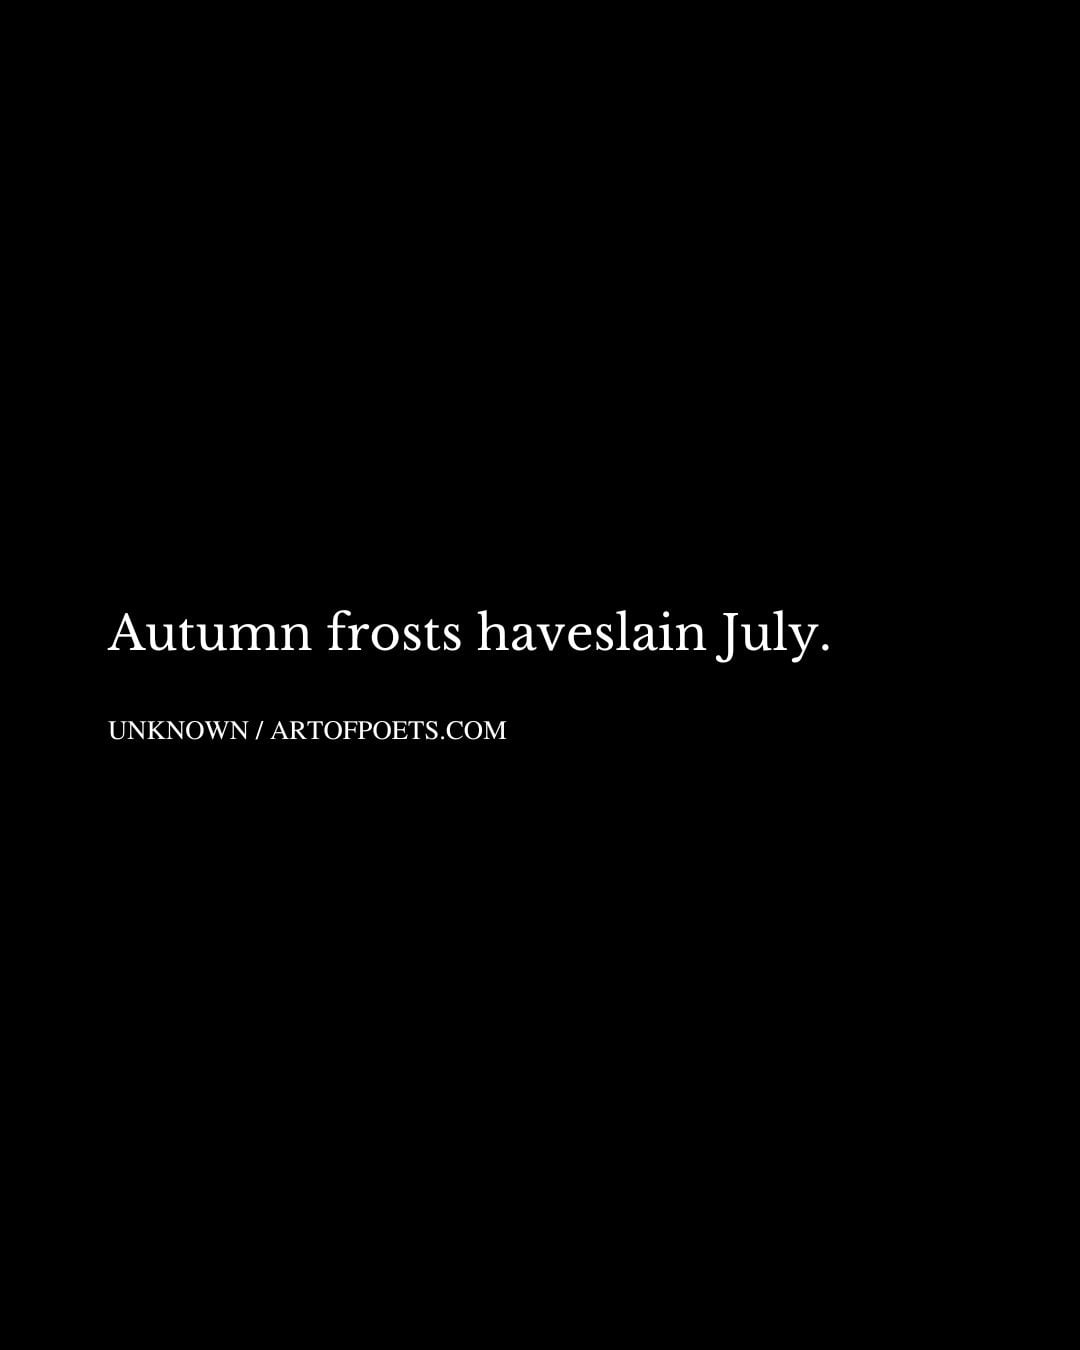 Autumn frosts have slain July